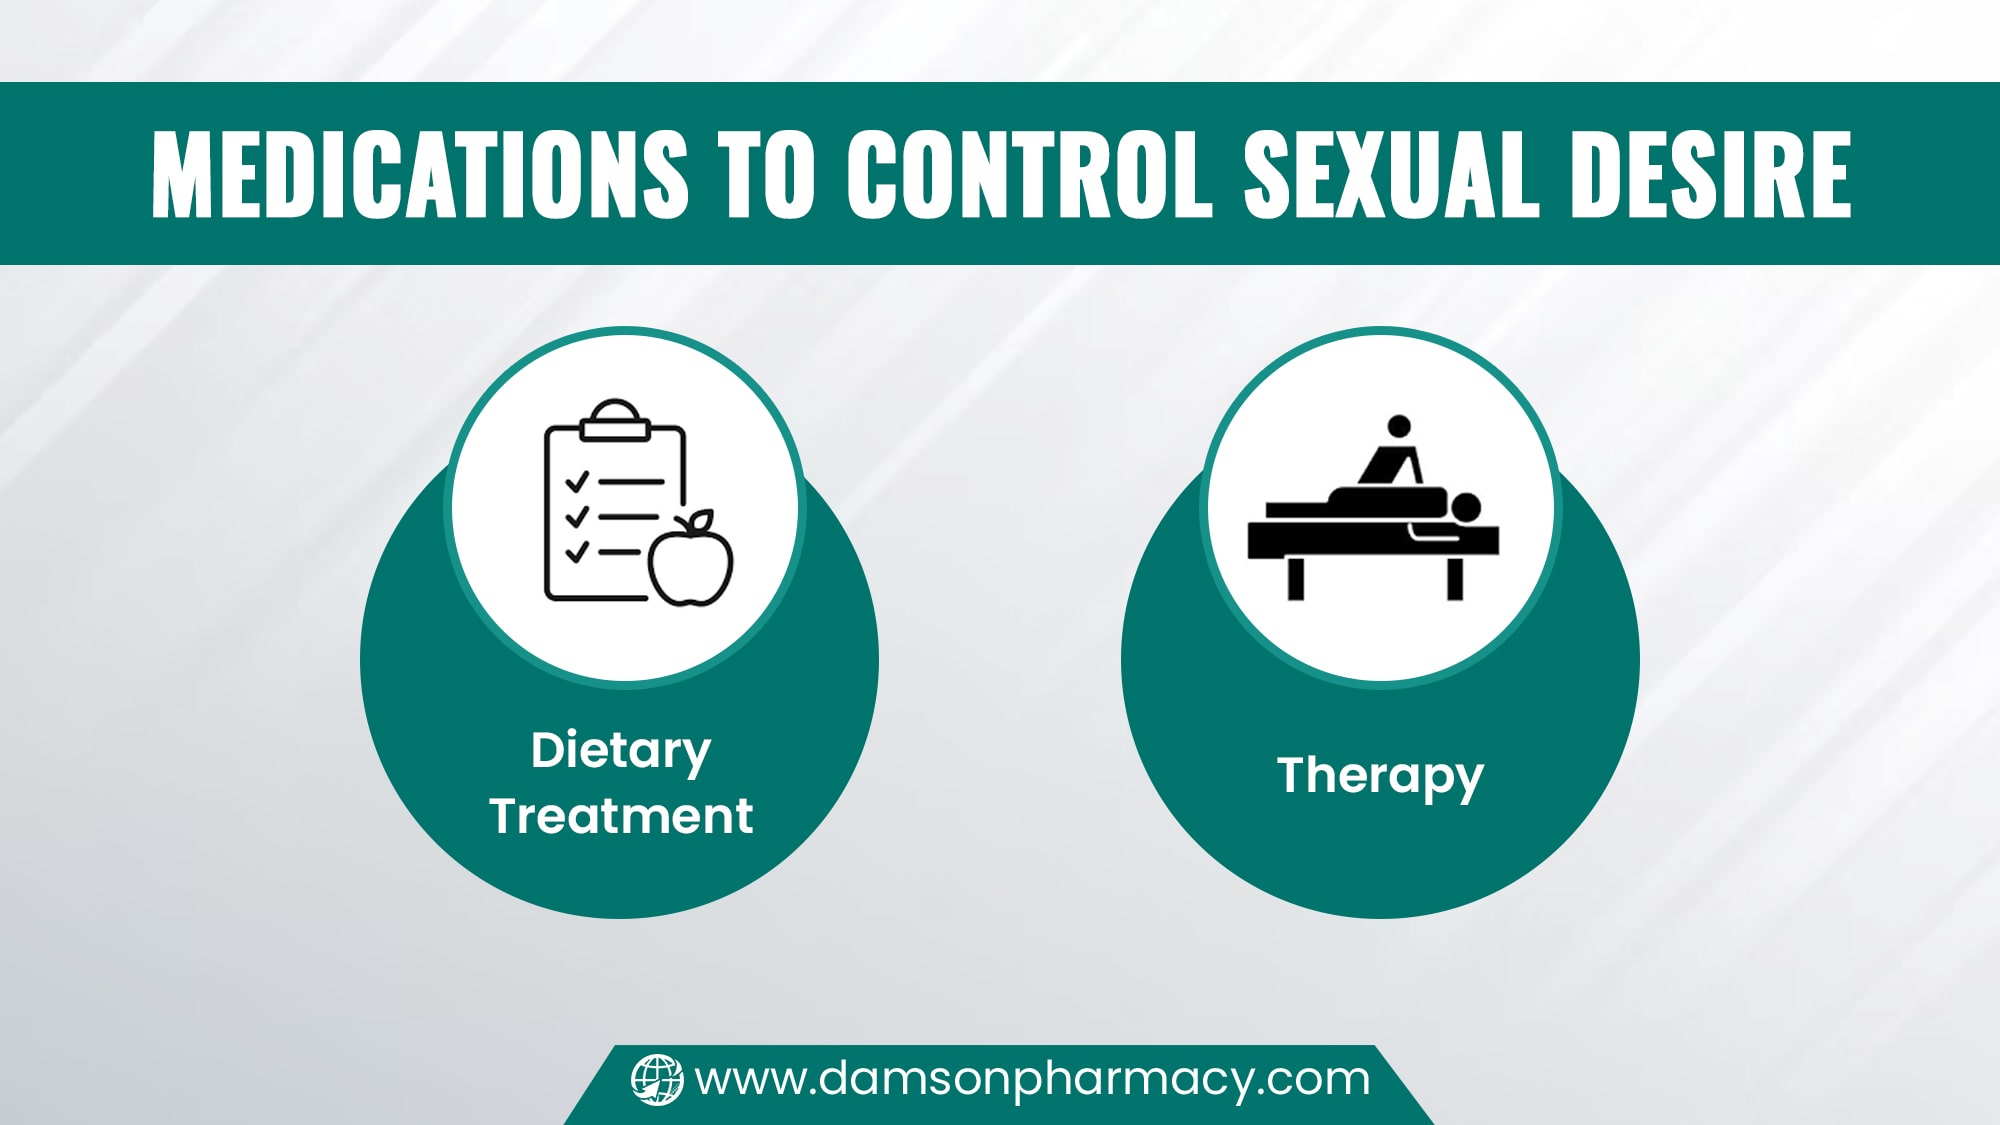 Medications to Control Sexual Desire